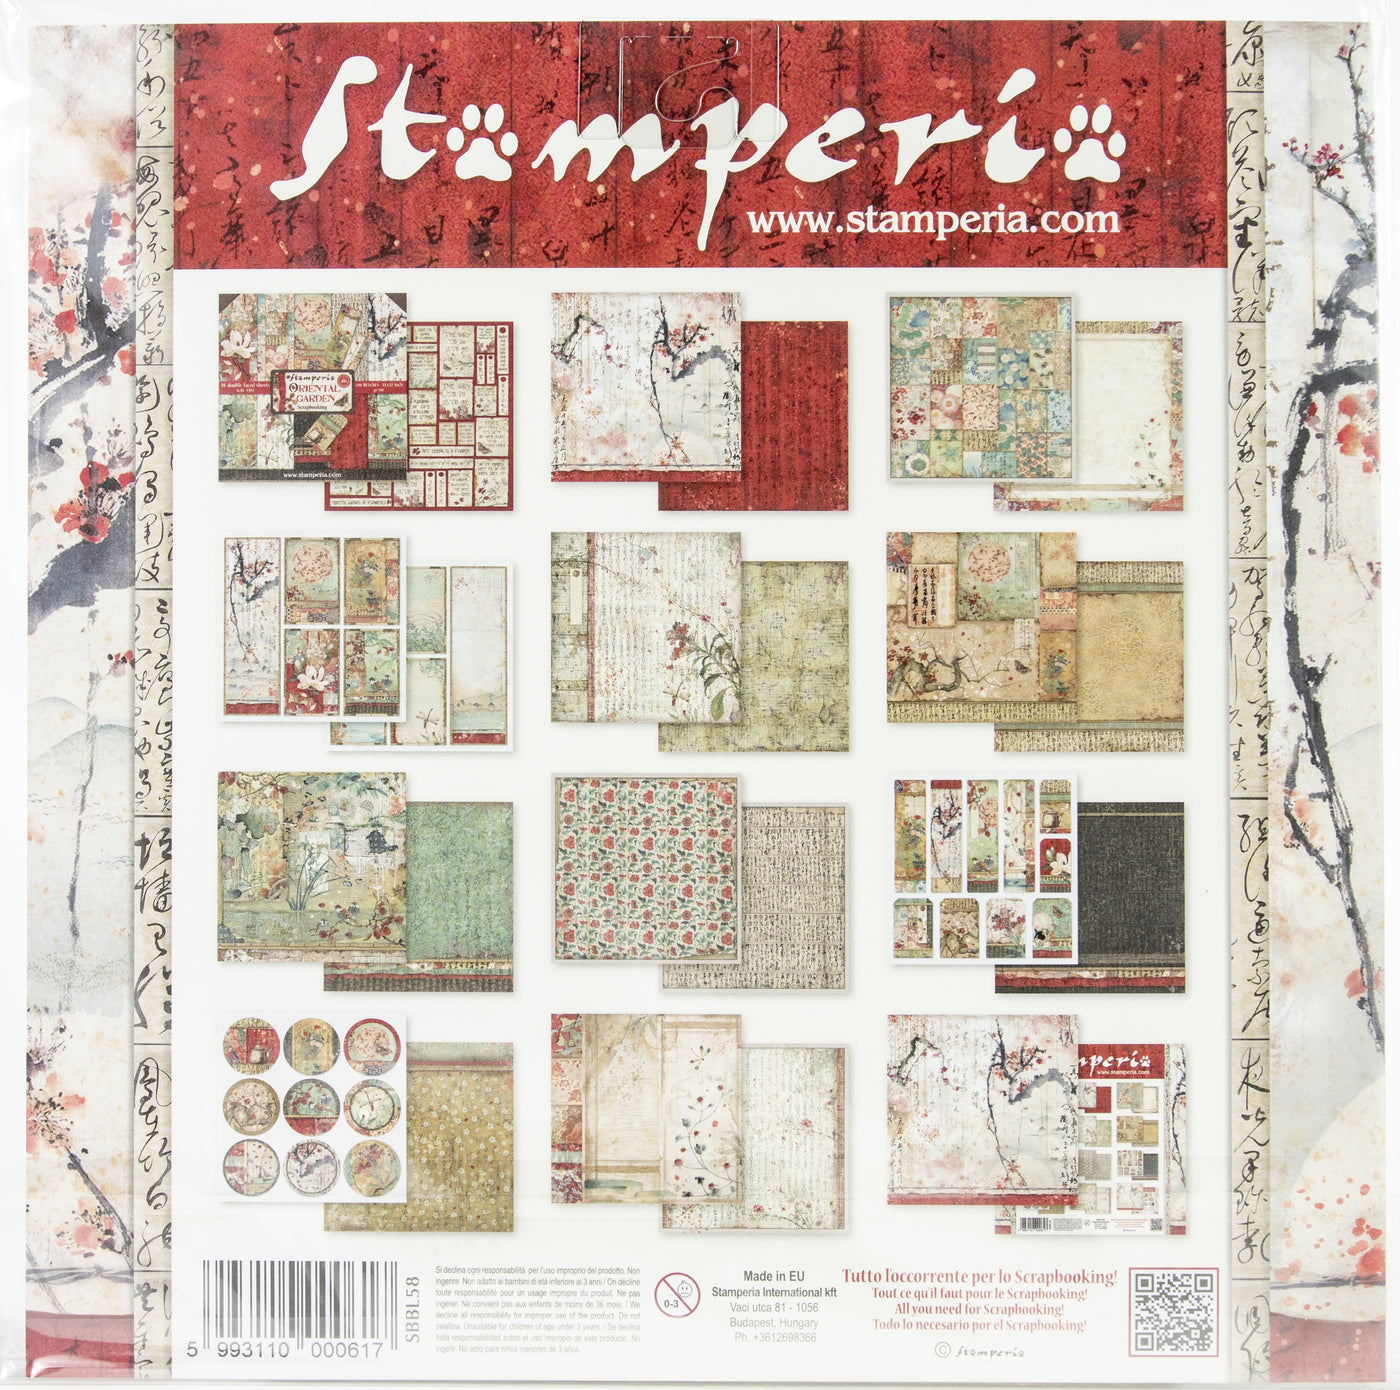 Stamperia Scrapbook Paper Pad, 10 Sheets, 12x12 - Oriental Garden